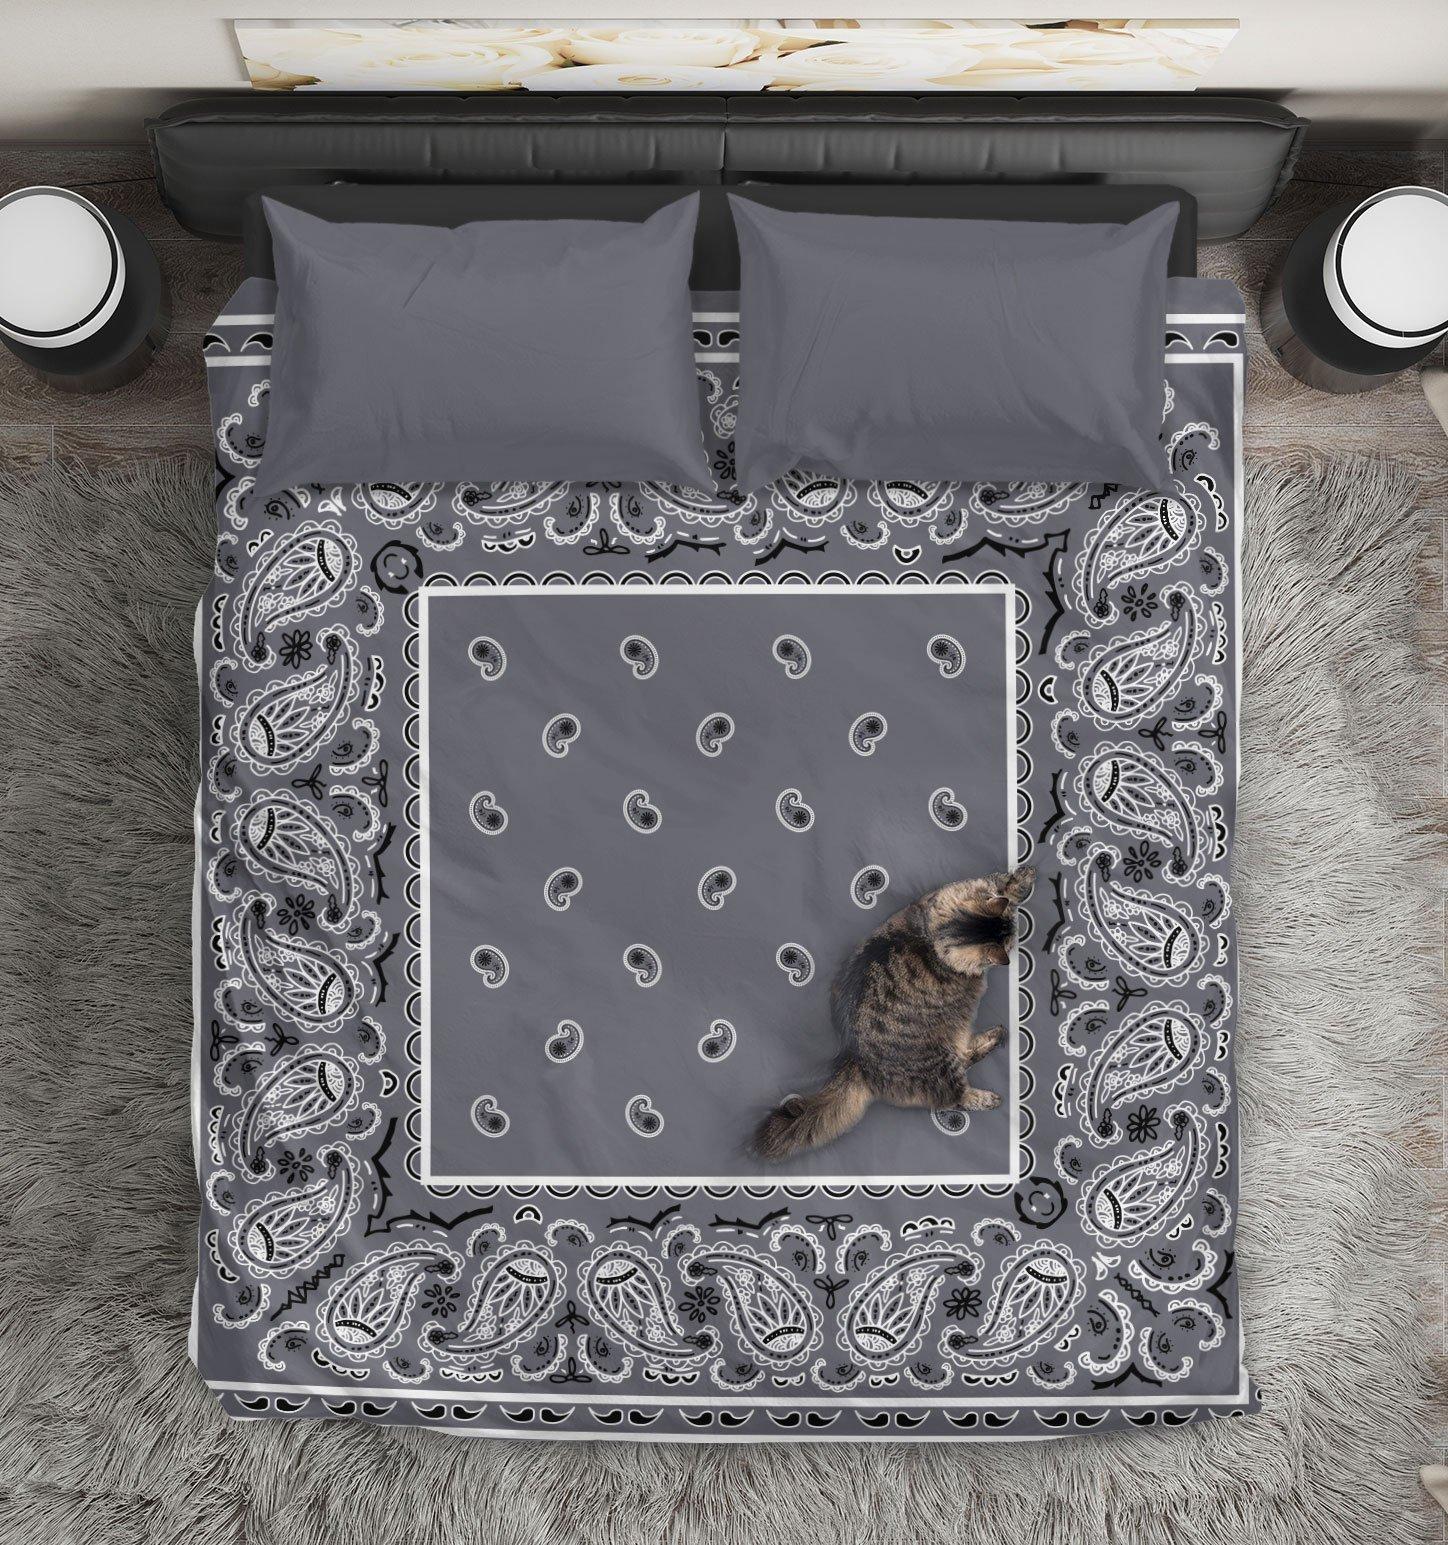 Classic gray bandana duvet cover bedding set - king